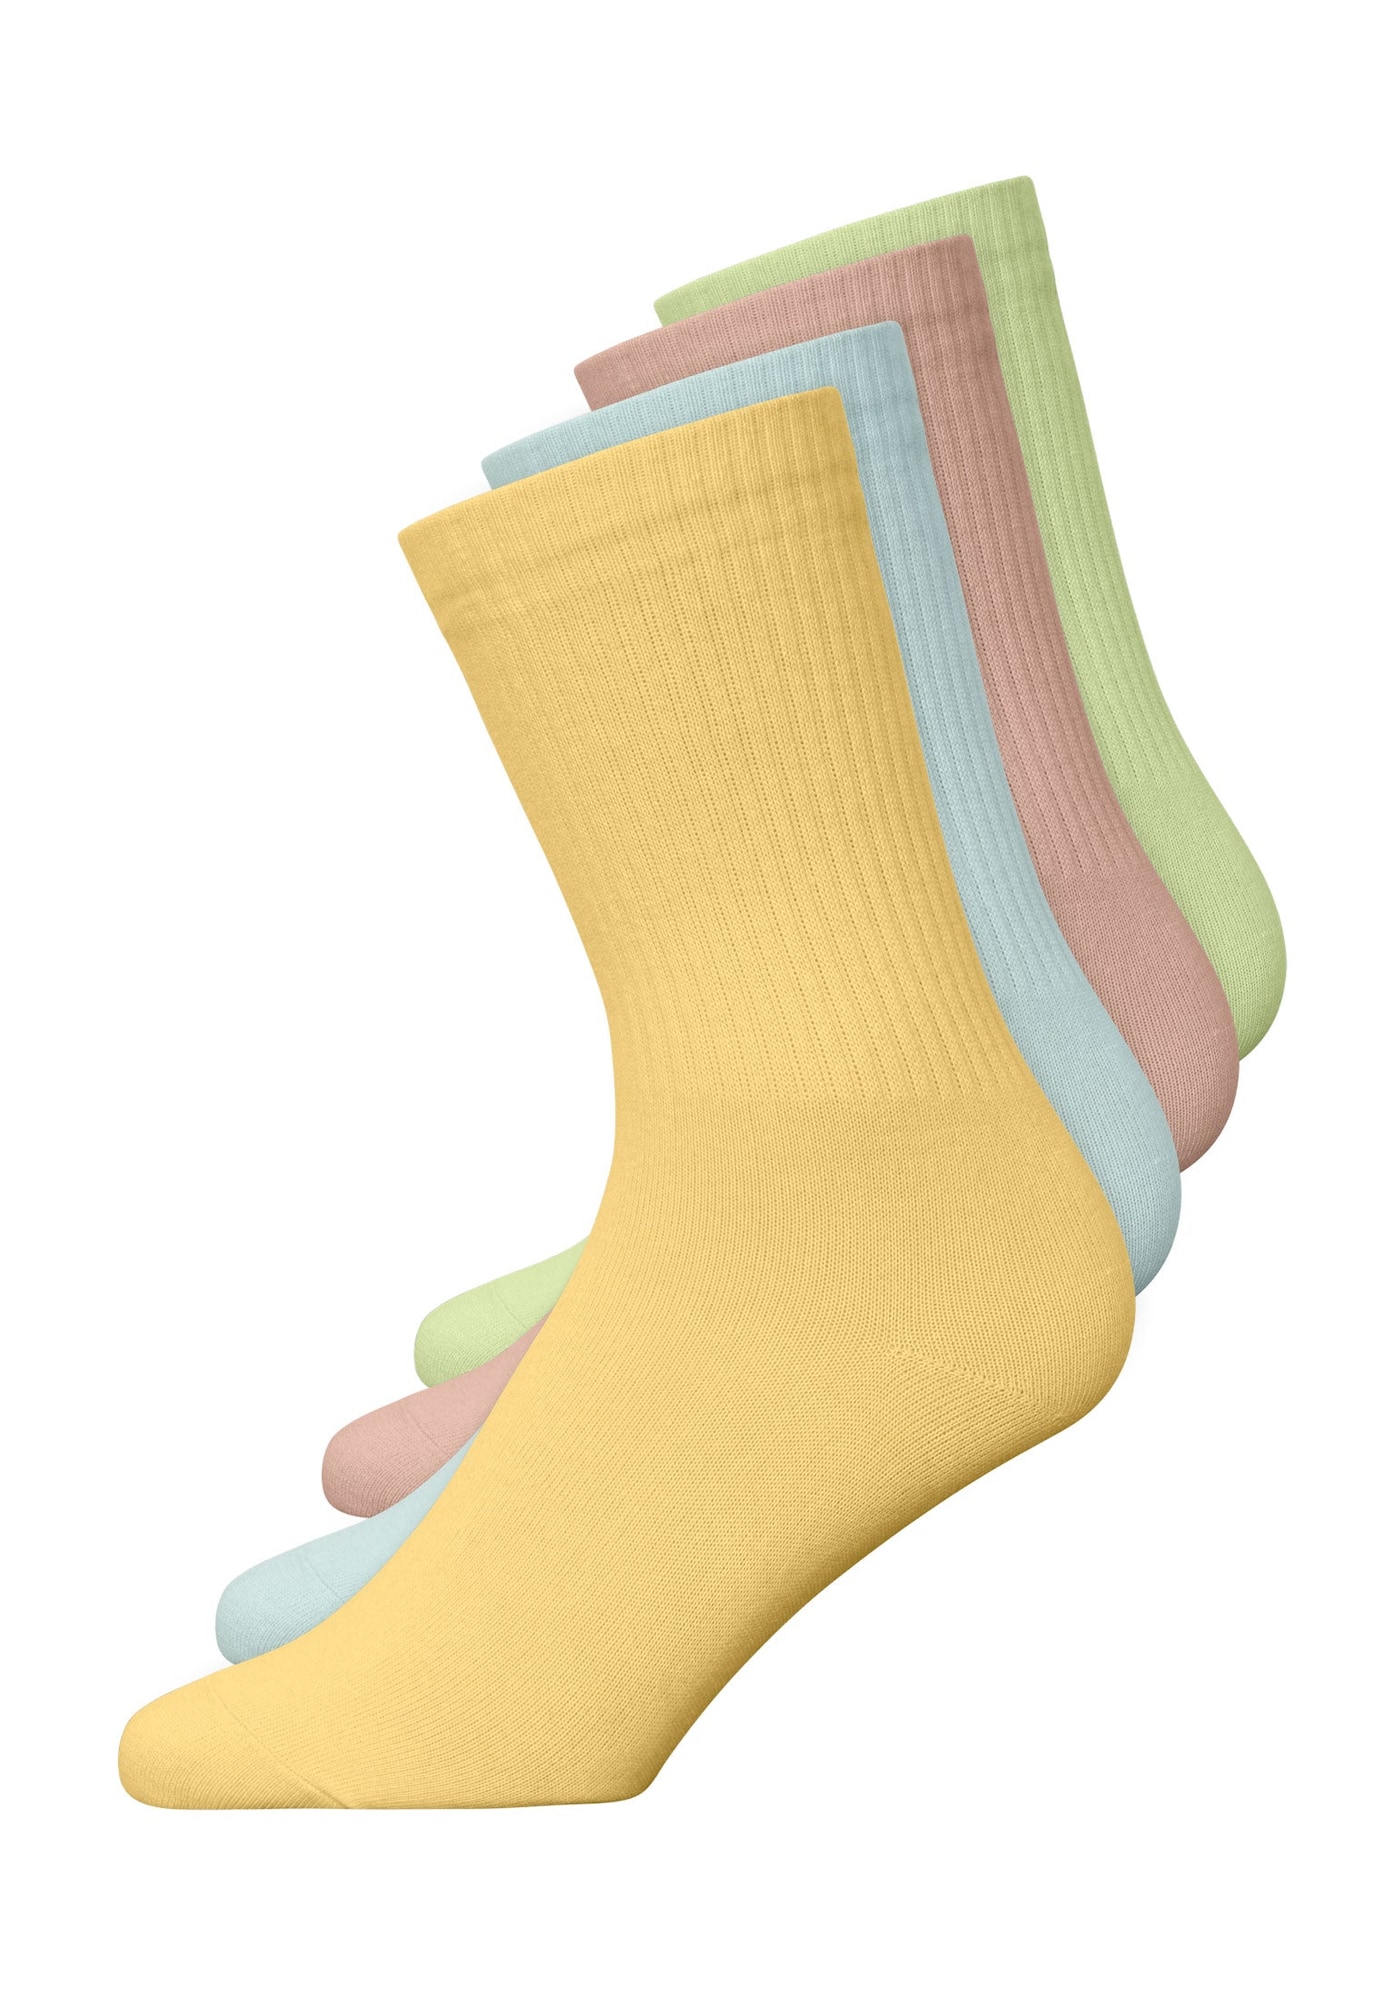 SNOCKS Socken gelb / blau / grn